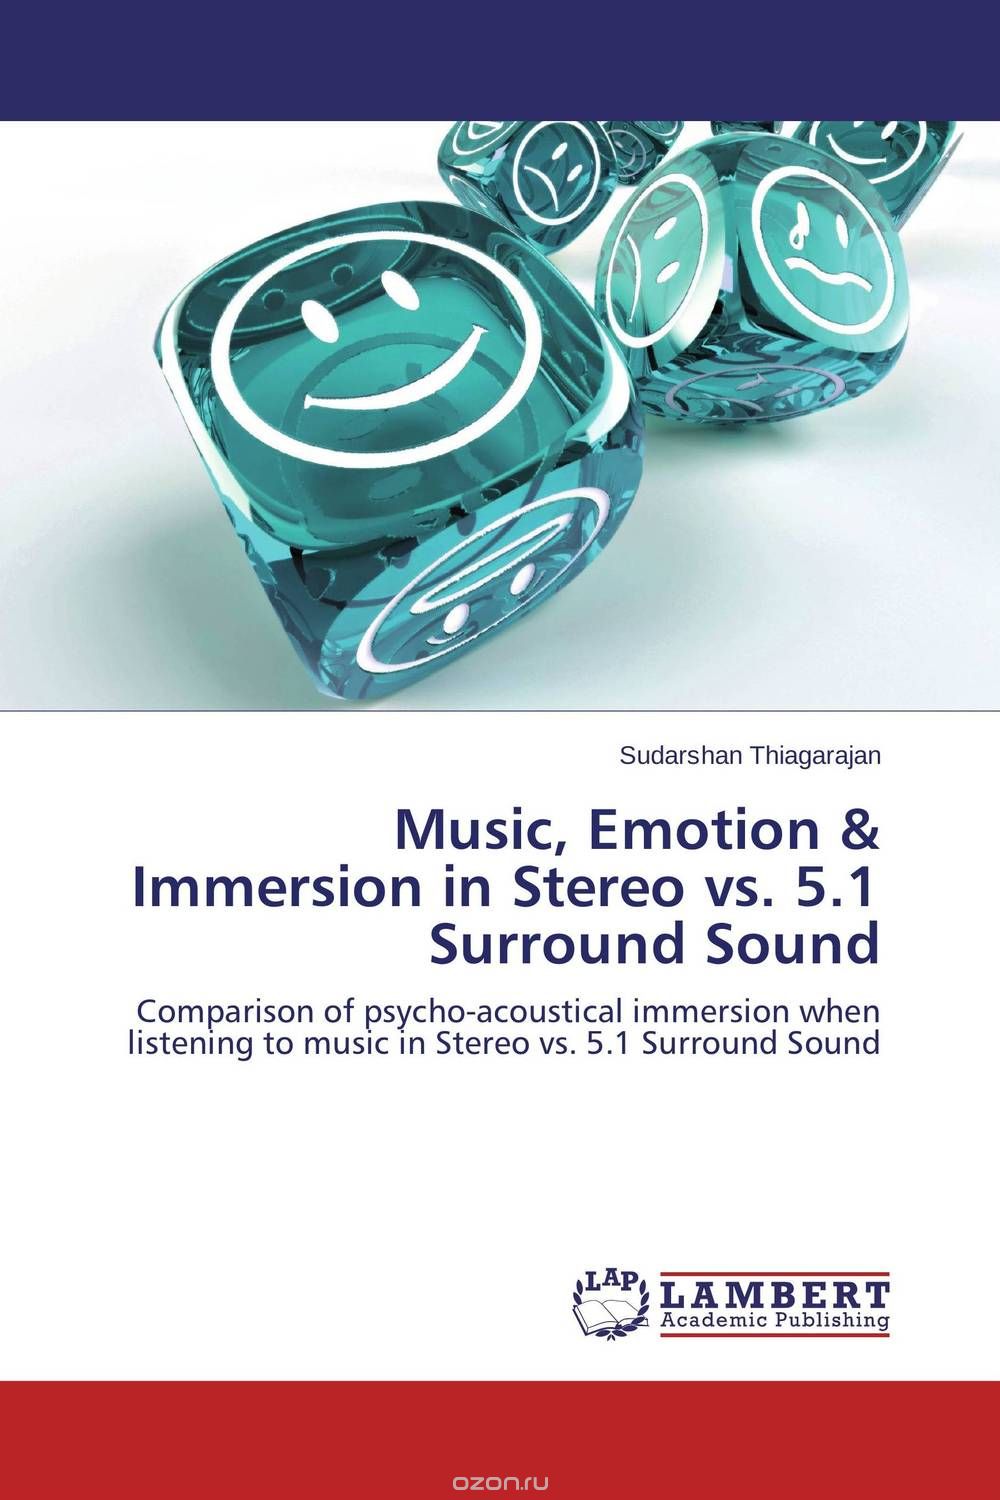 Скачать книгу "Music, Emotion & Immersion in Stereo vs. 5.1 Surround Sound"